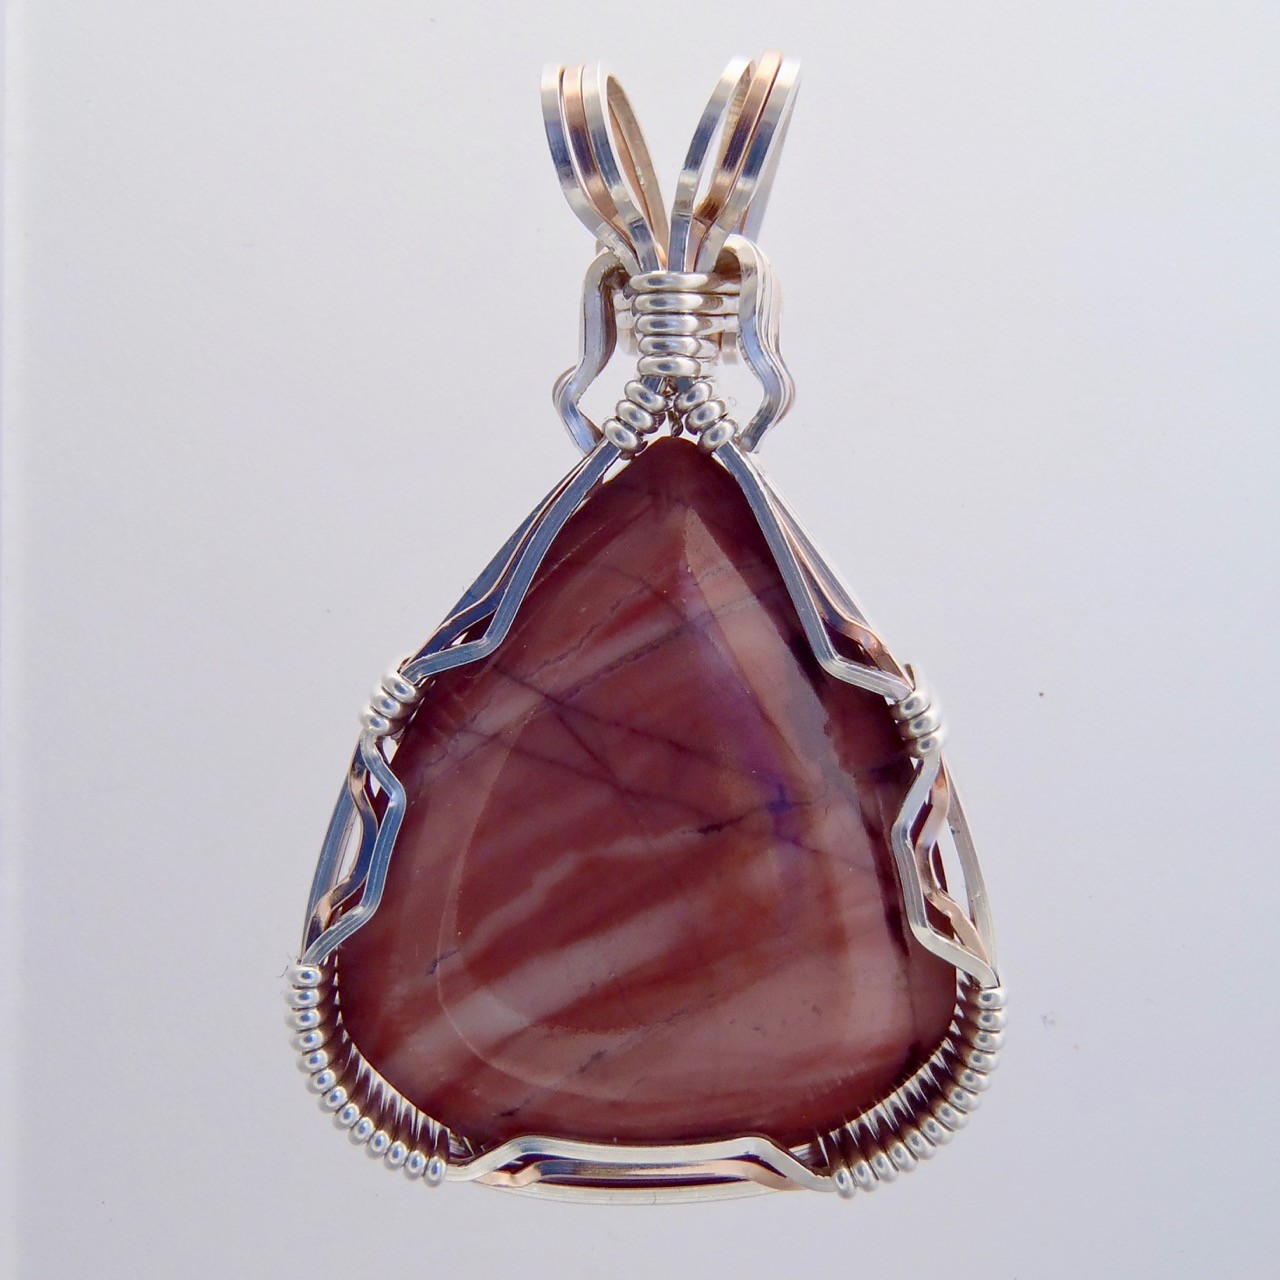 Michigan's pink Kona Dolomite stone pendant